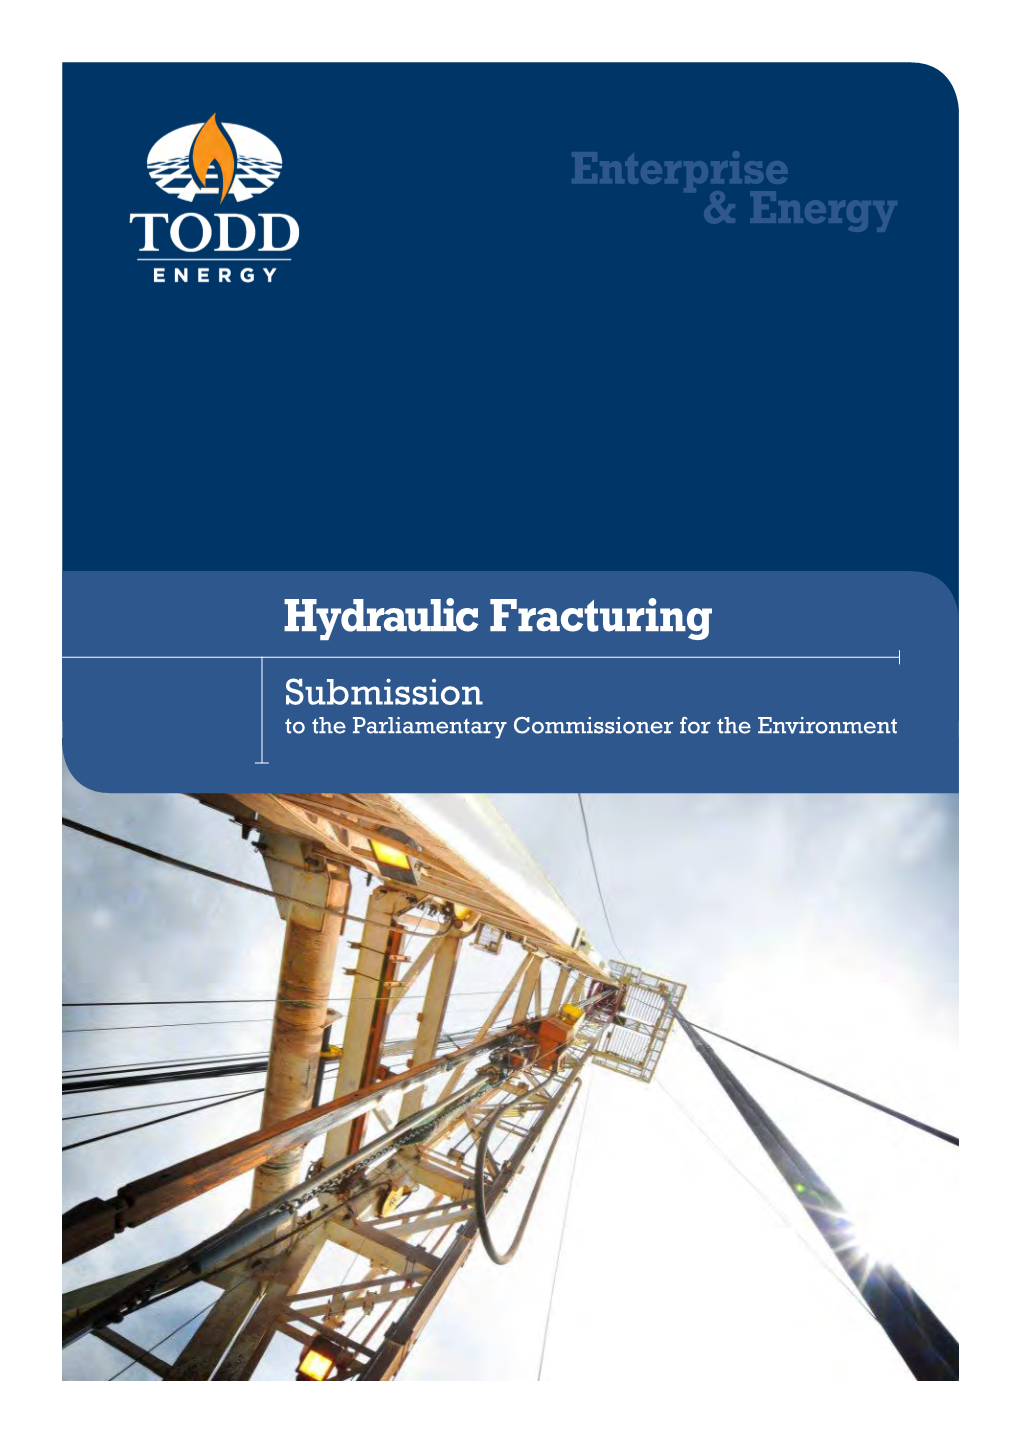 Enterprise & Energy Hydraulic Fracturing